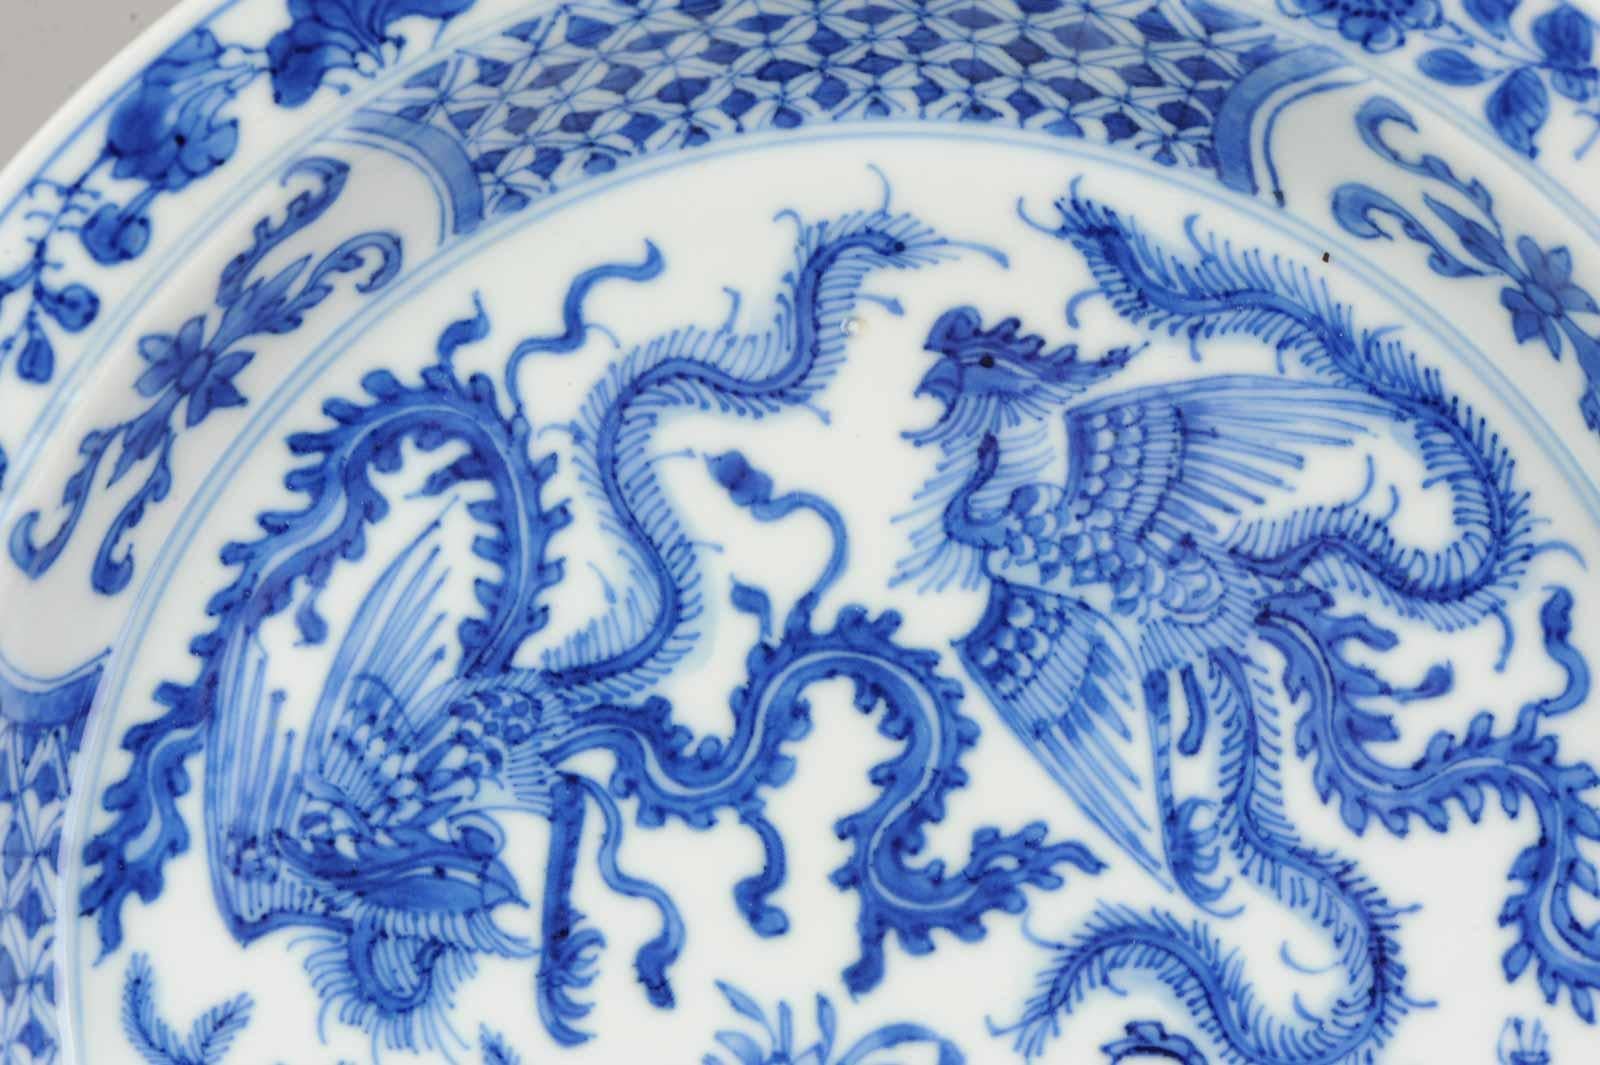 Kangxi-Porzellanteller mit Phönix-Figuren:: Marke Lingzhi Fungus:: um 1700 7